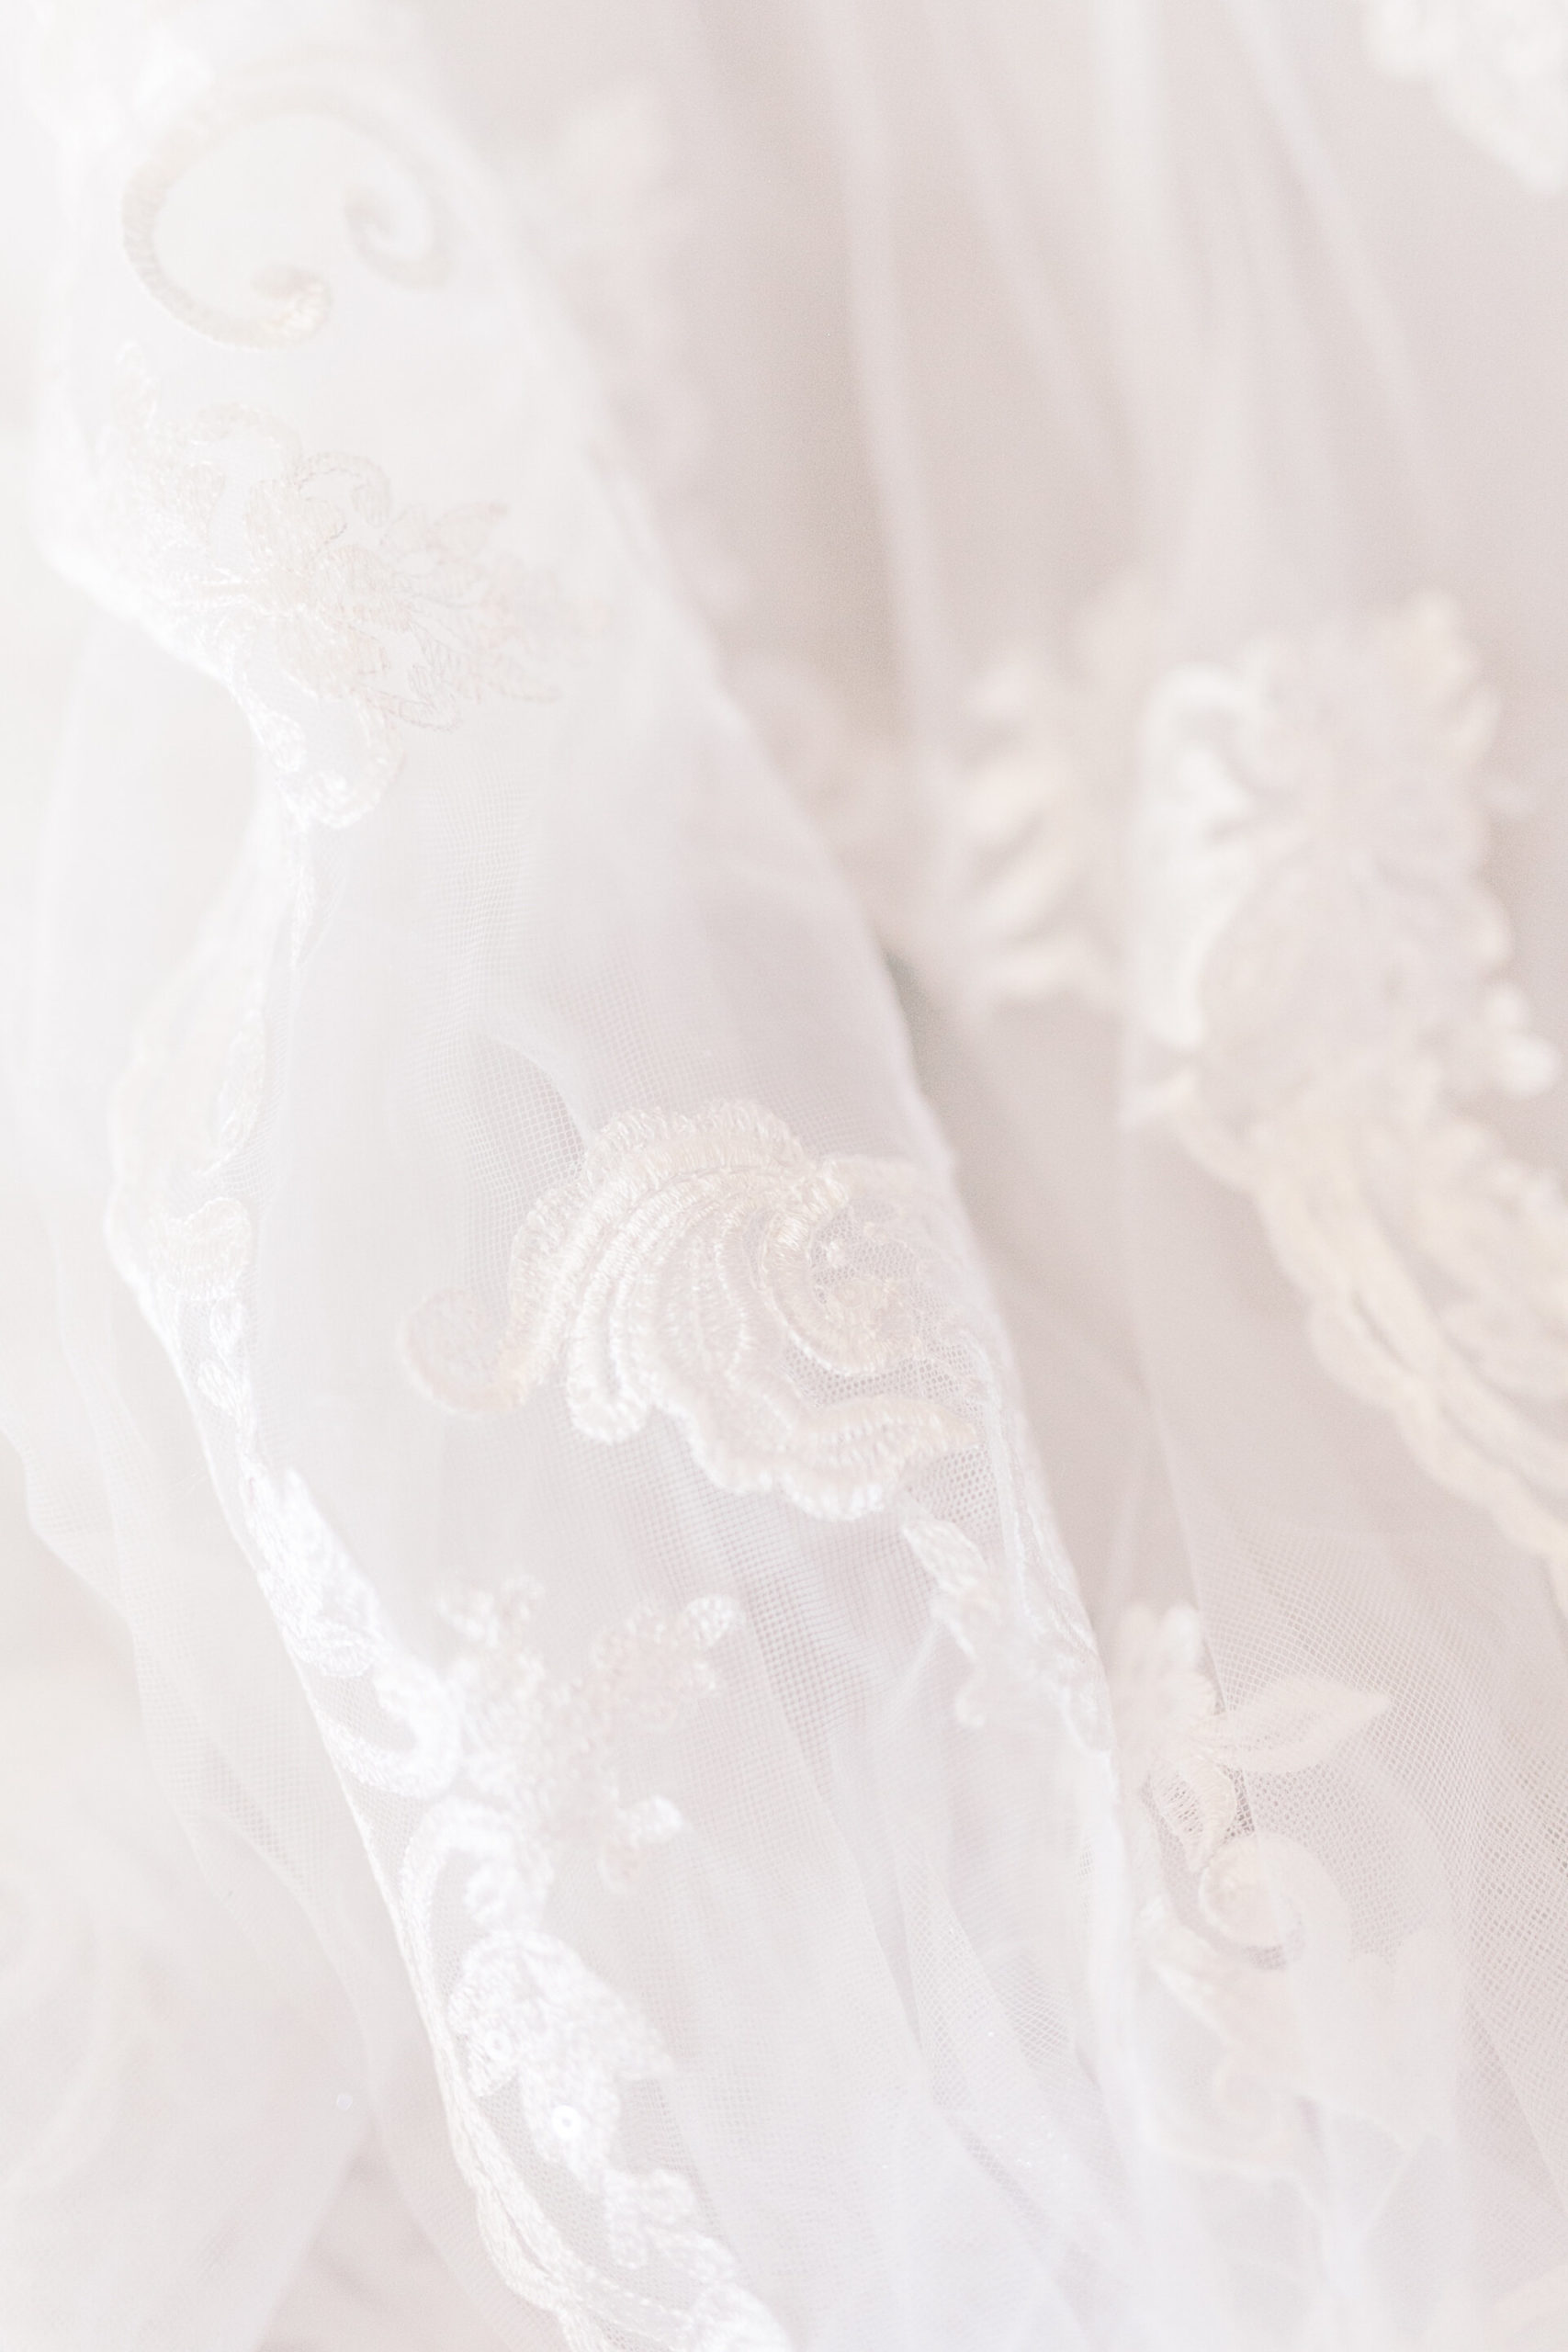 Lace details of stunning wedding dress for Hilton Head wedding in South Carolina.